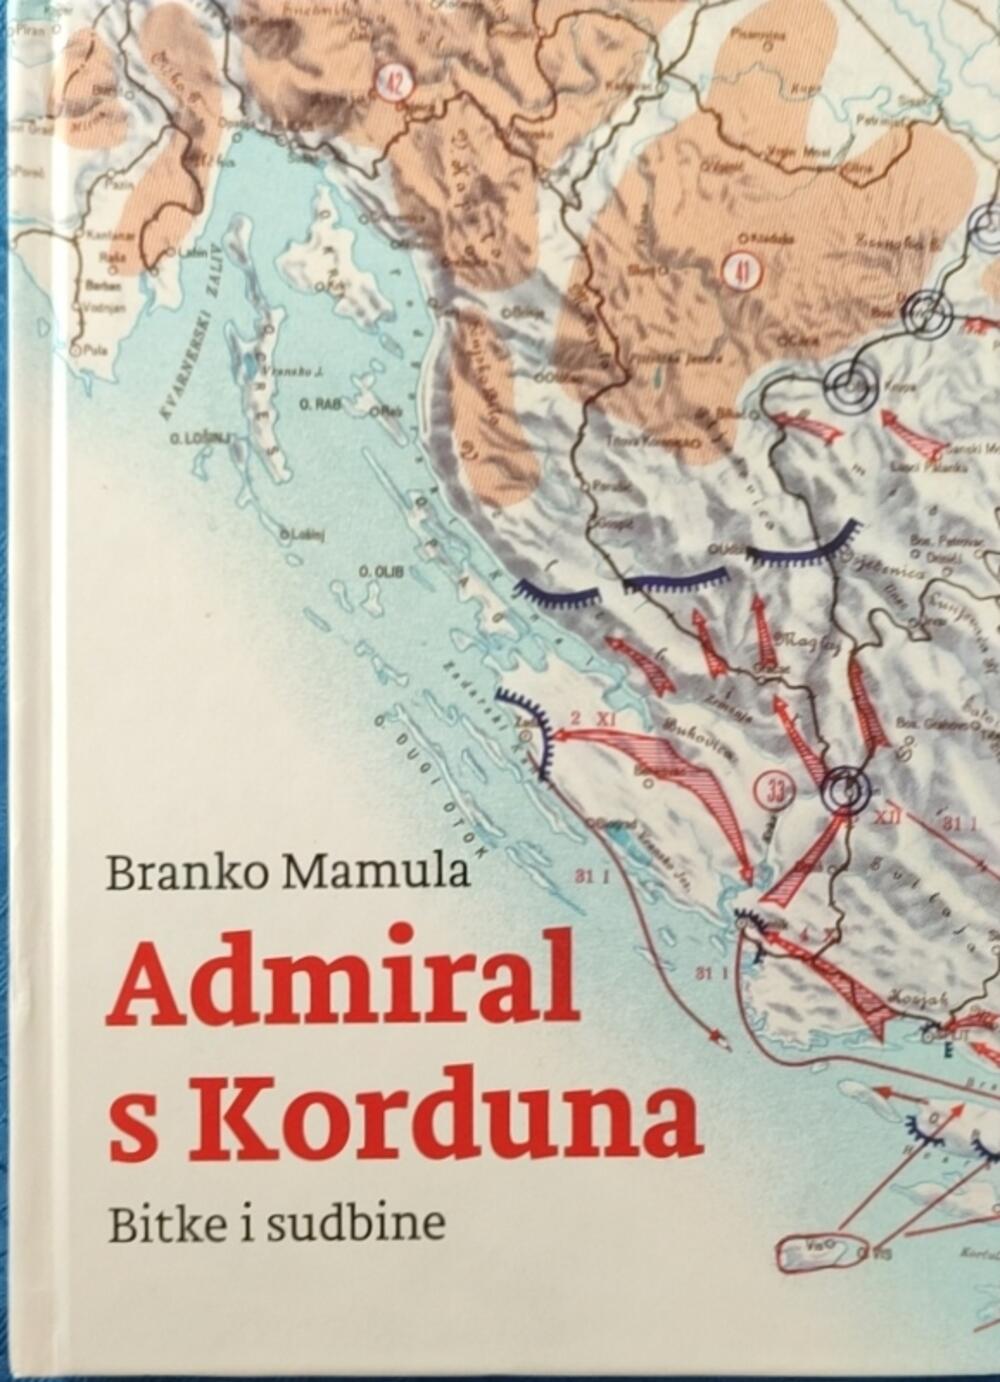 Autobiografska knjiga “Admiral sa Korduna